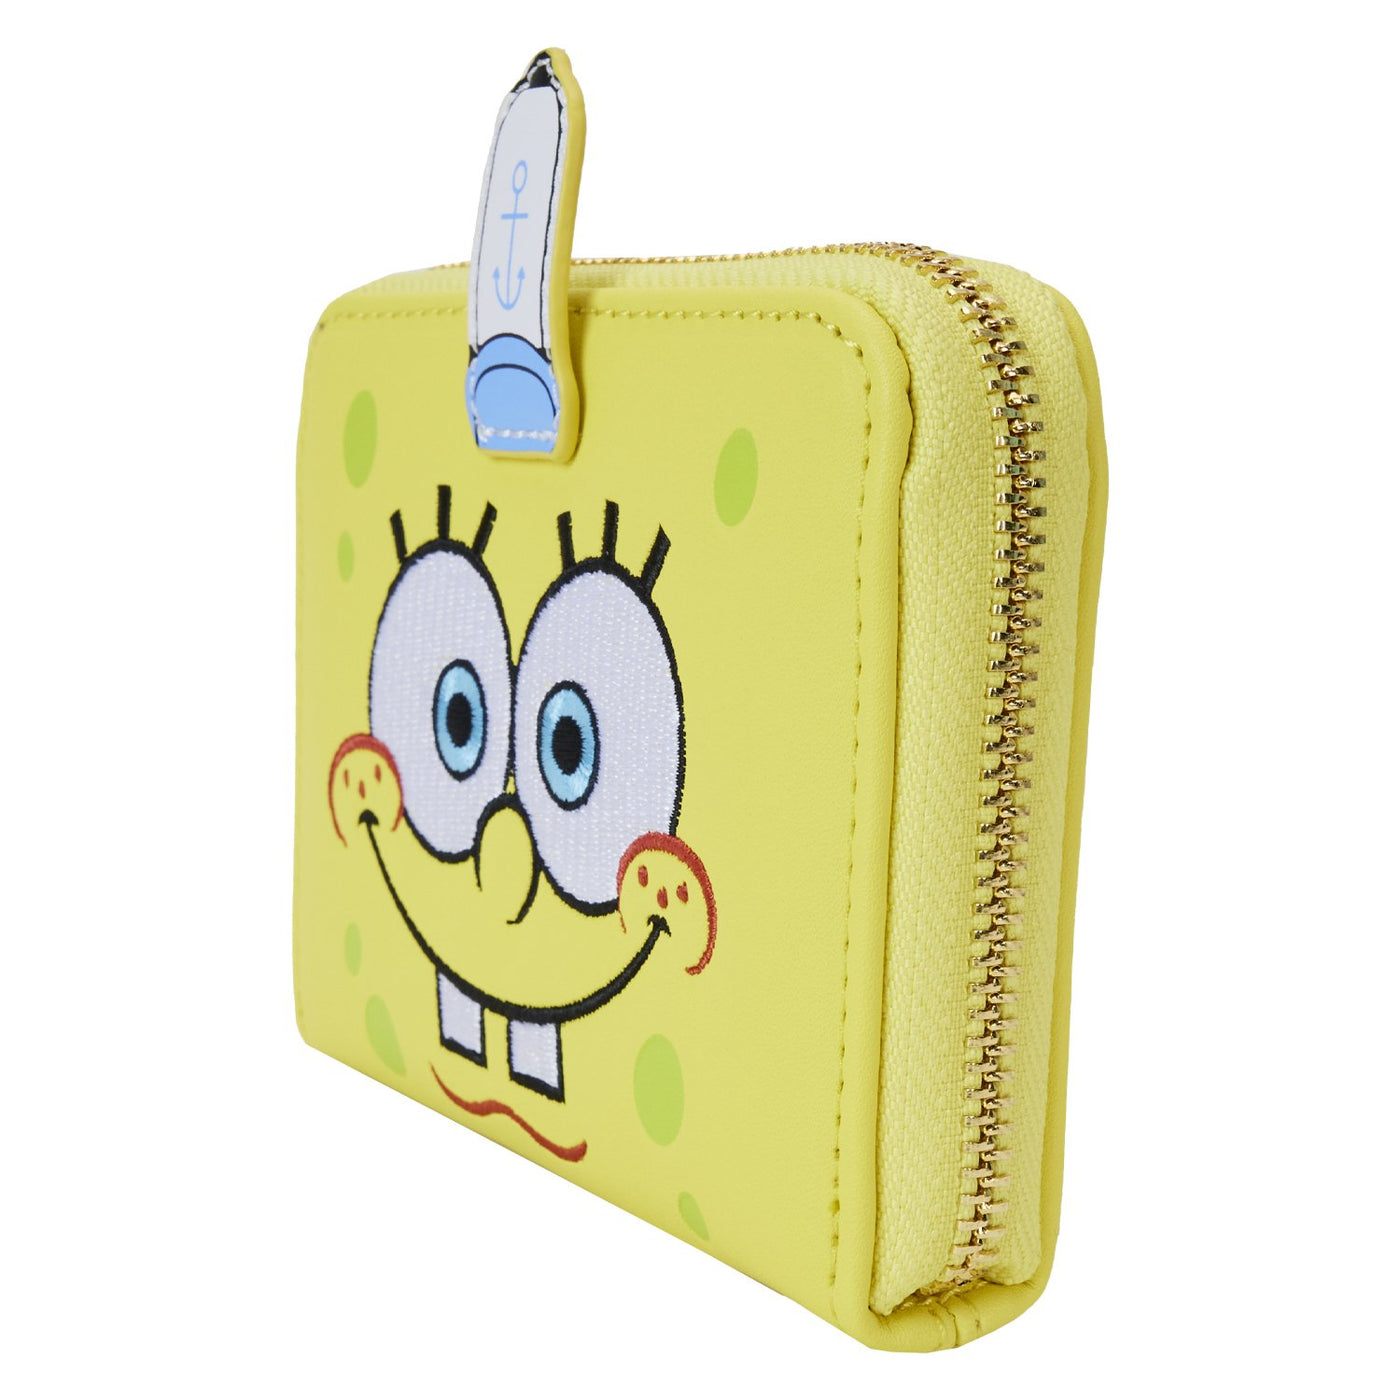 Loungefly Nickelodeon Spongebob Squarepants 25th Anniversary Zip-Around Wallet - Side View